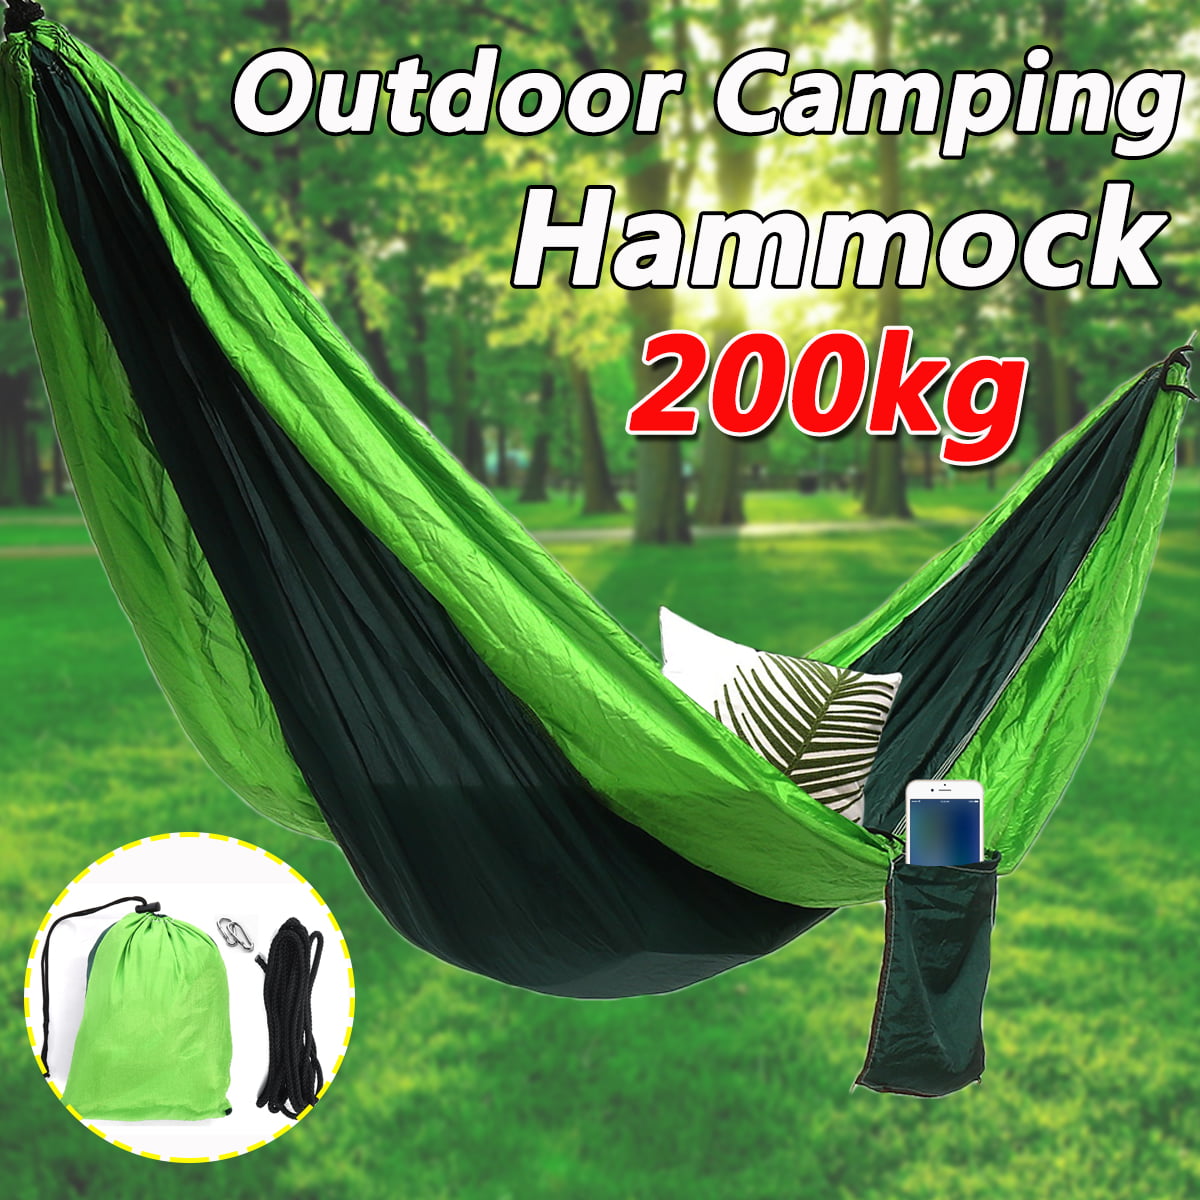 7' HAMMOCK Camping Lightweight Travel Portable Hanging Swing Bed Porch Yard Seat 